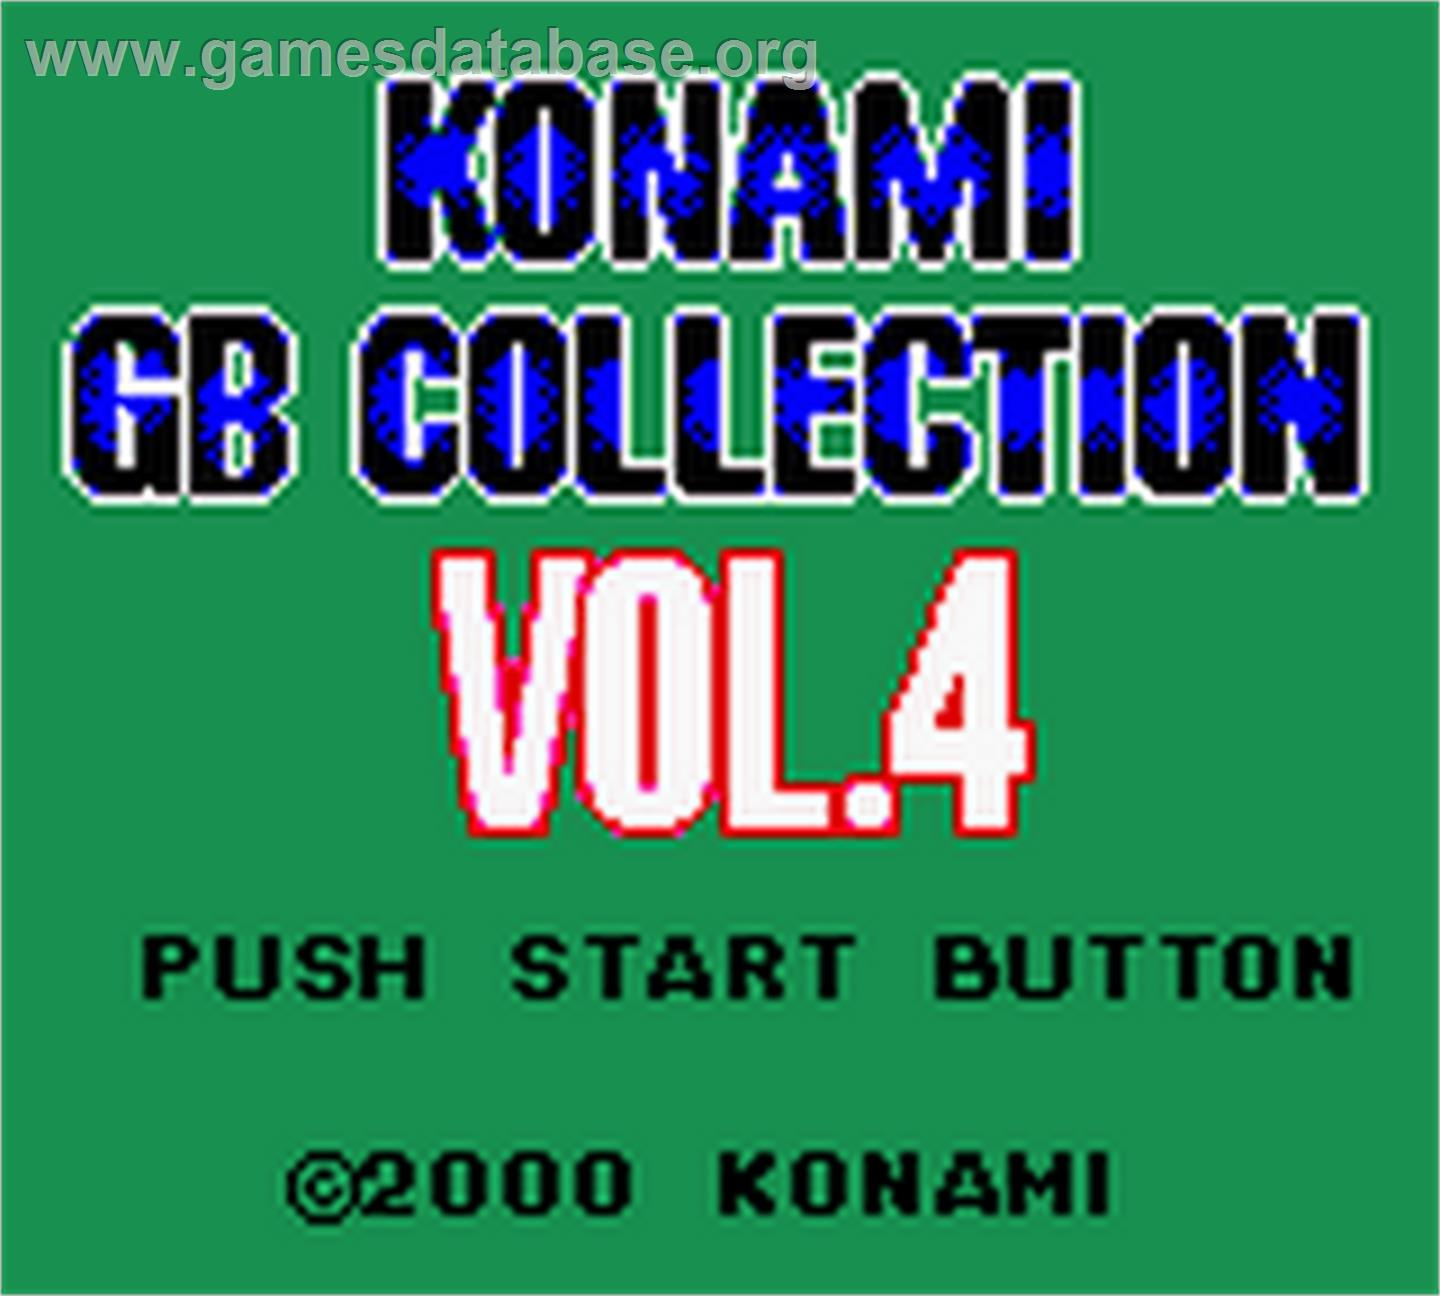 Konami GB Collection Vol. 4 - Nintendo Game Boy Color - Artwork - Title Screen